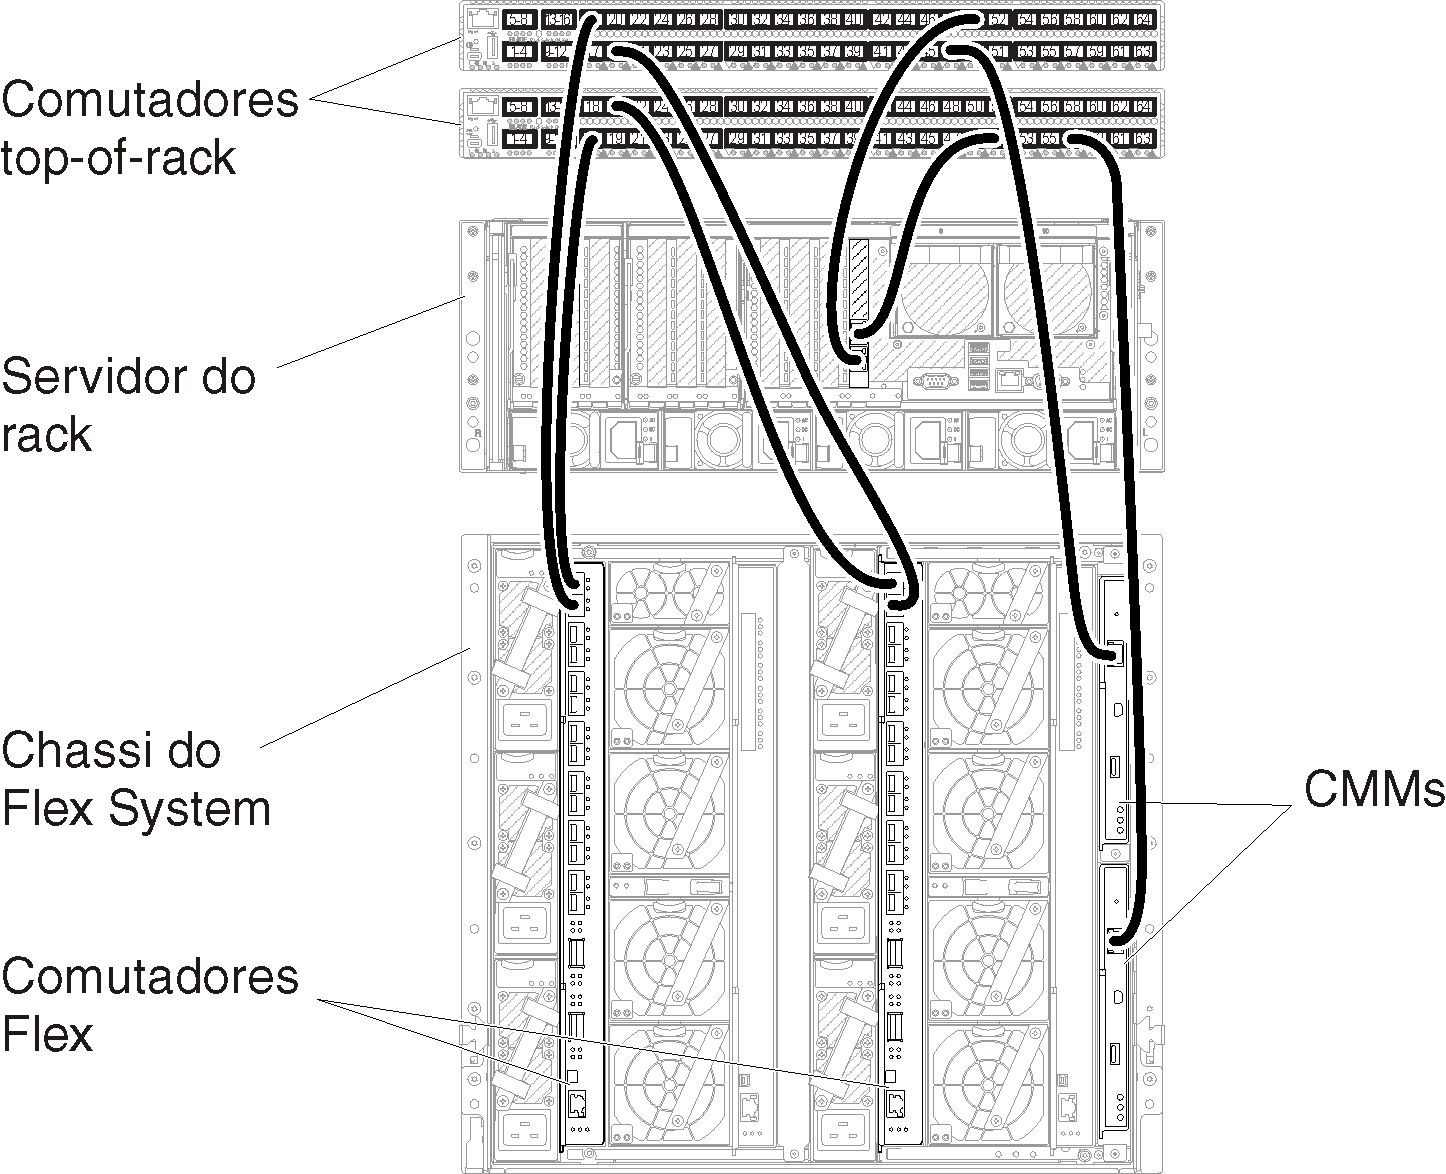 Ilustra cabeamento do chassi e servidores de rack para comutadores top-of-rack para dados separados virtualmente e redes de gerenciamento